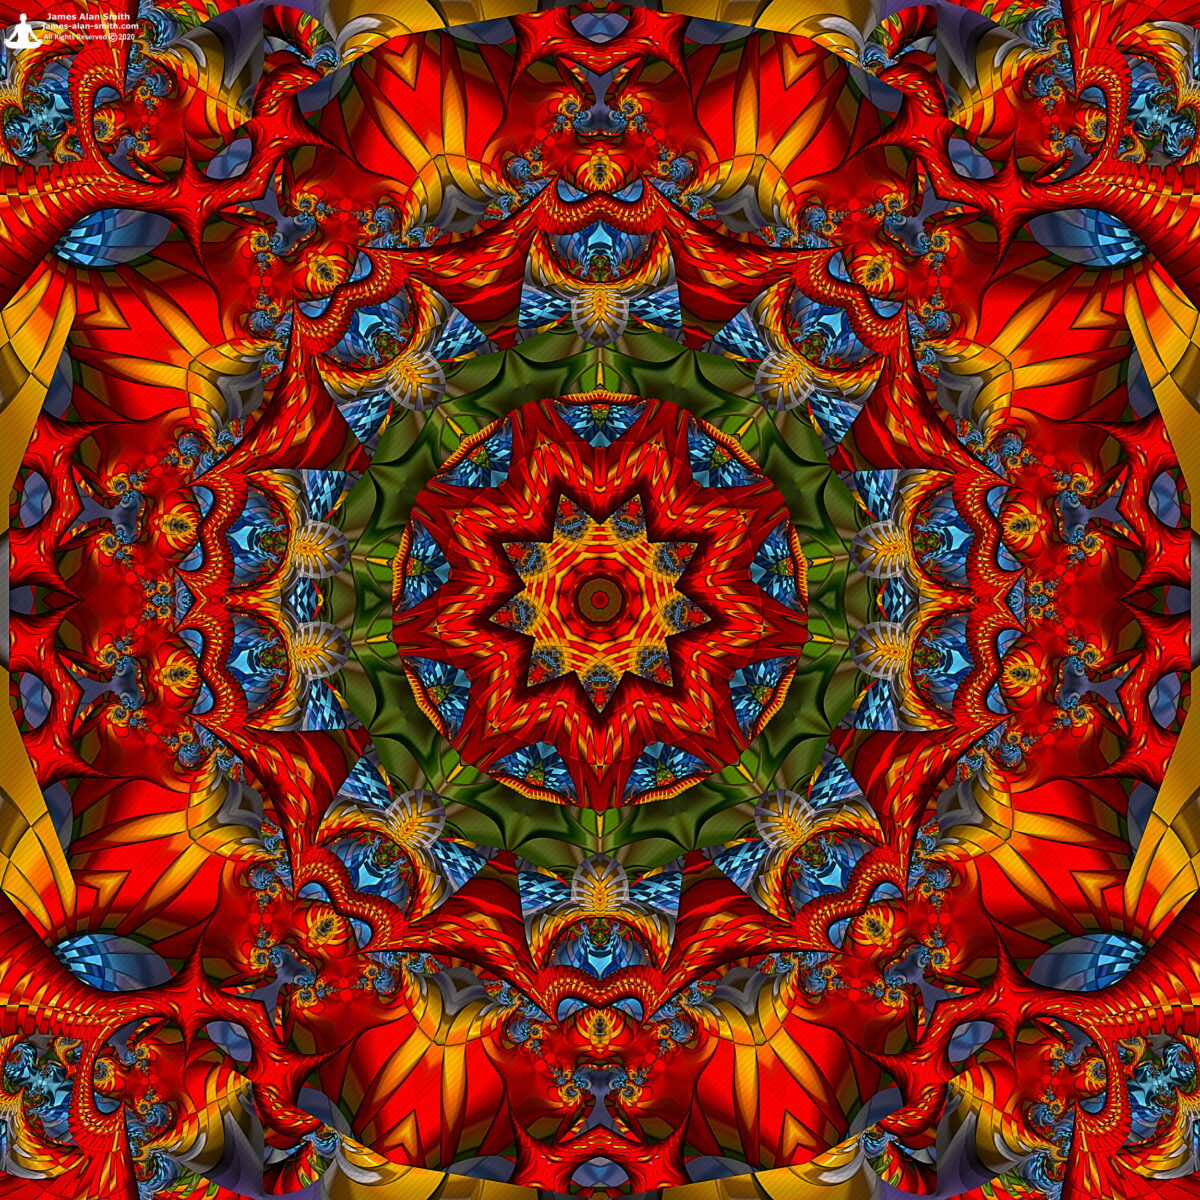 Unusual Mandala Series #06252020: Artwork by James Alan Smith